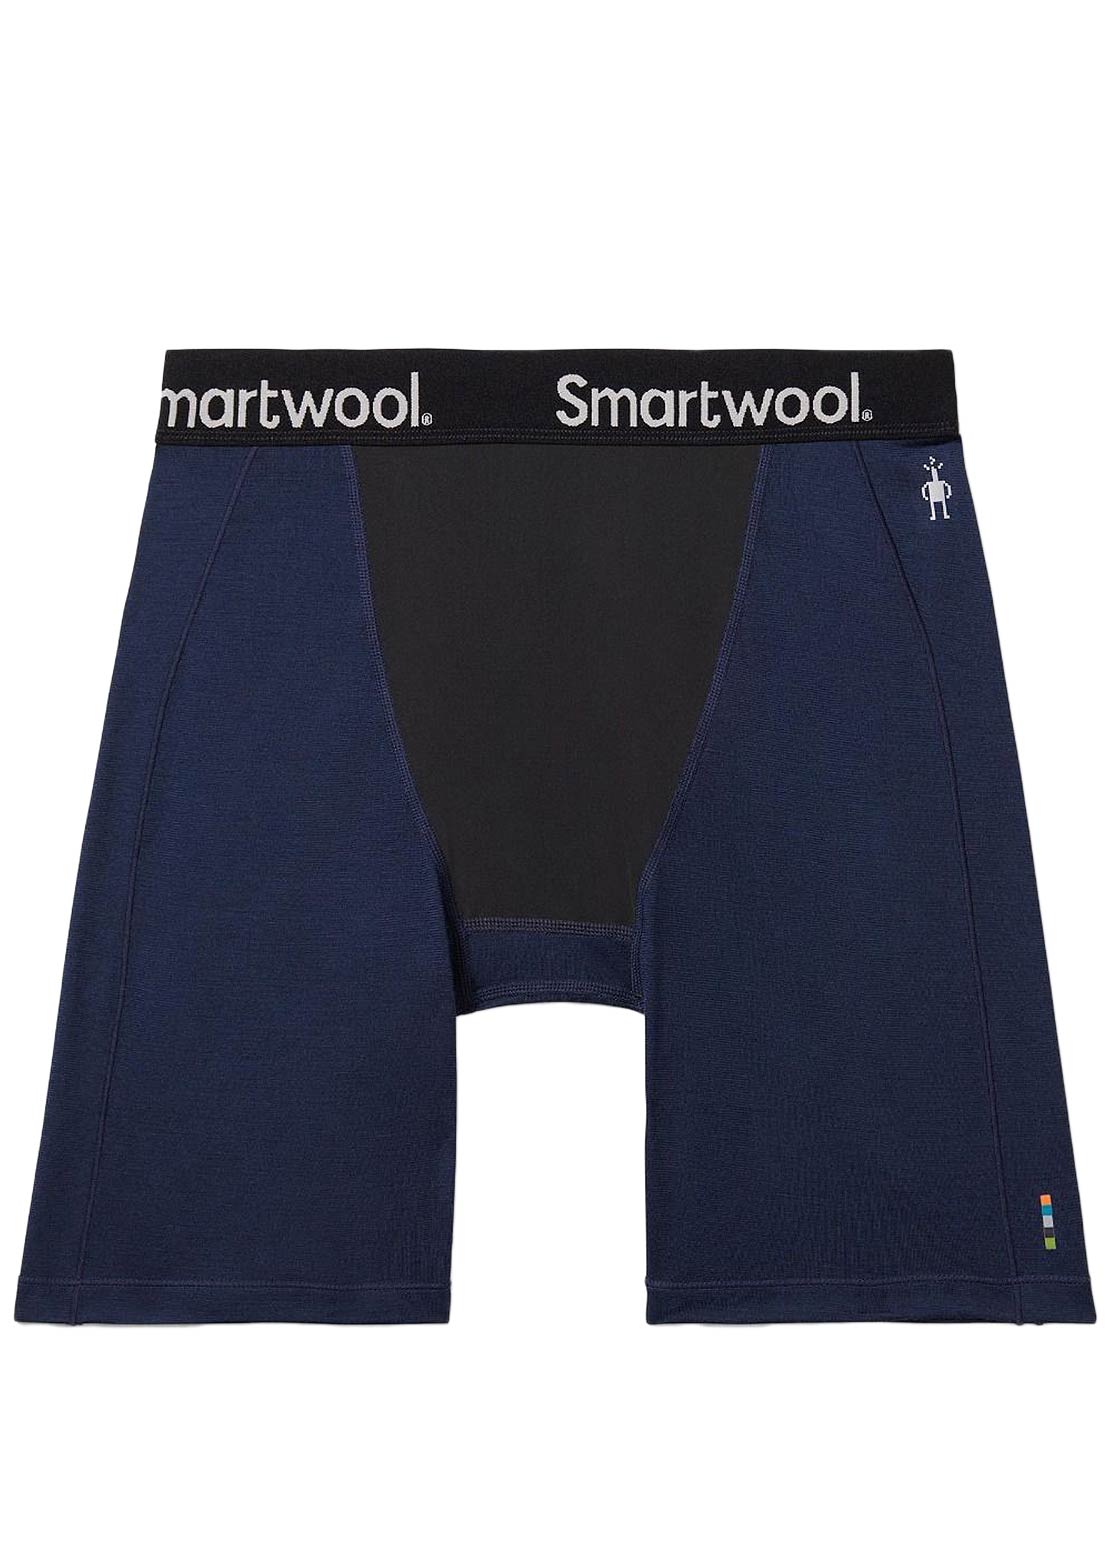 Smartwool Merino Boxer Brief Boxed - Men's, Boxers & Briefs